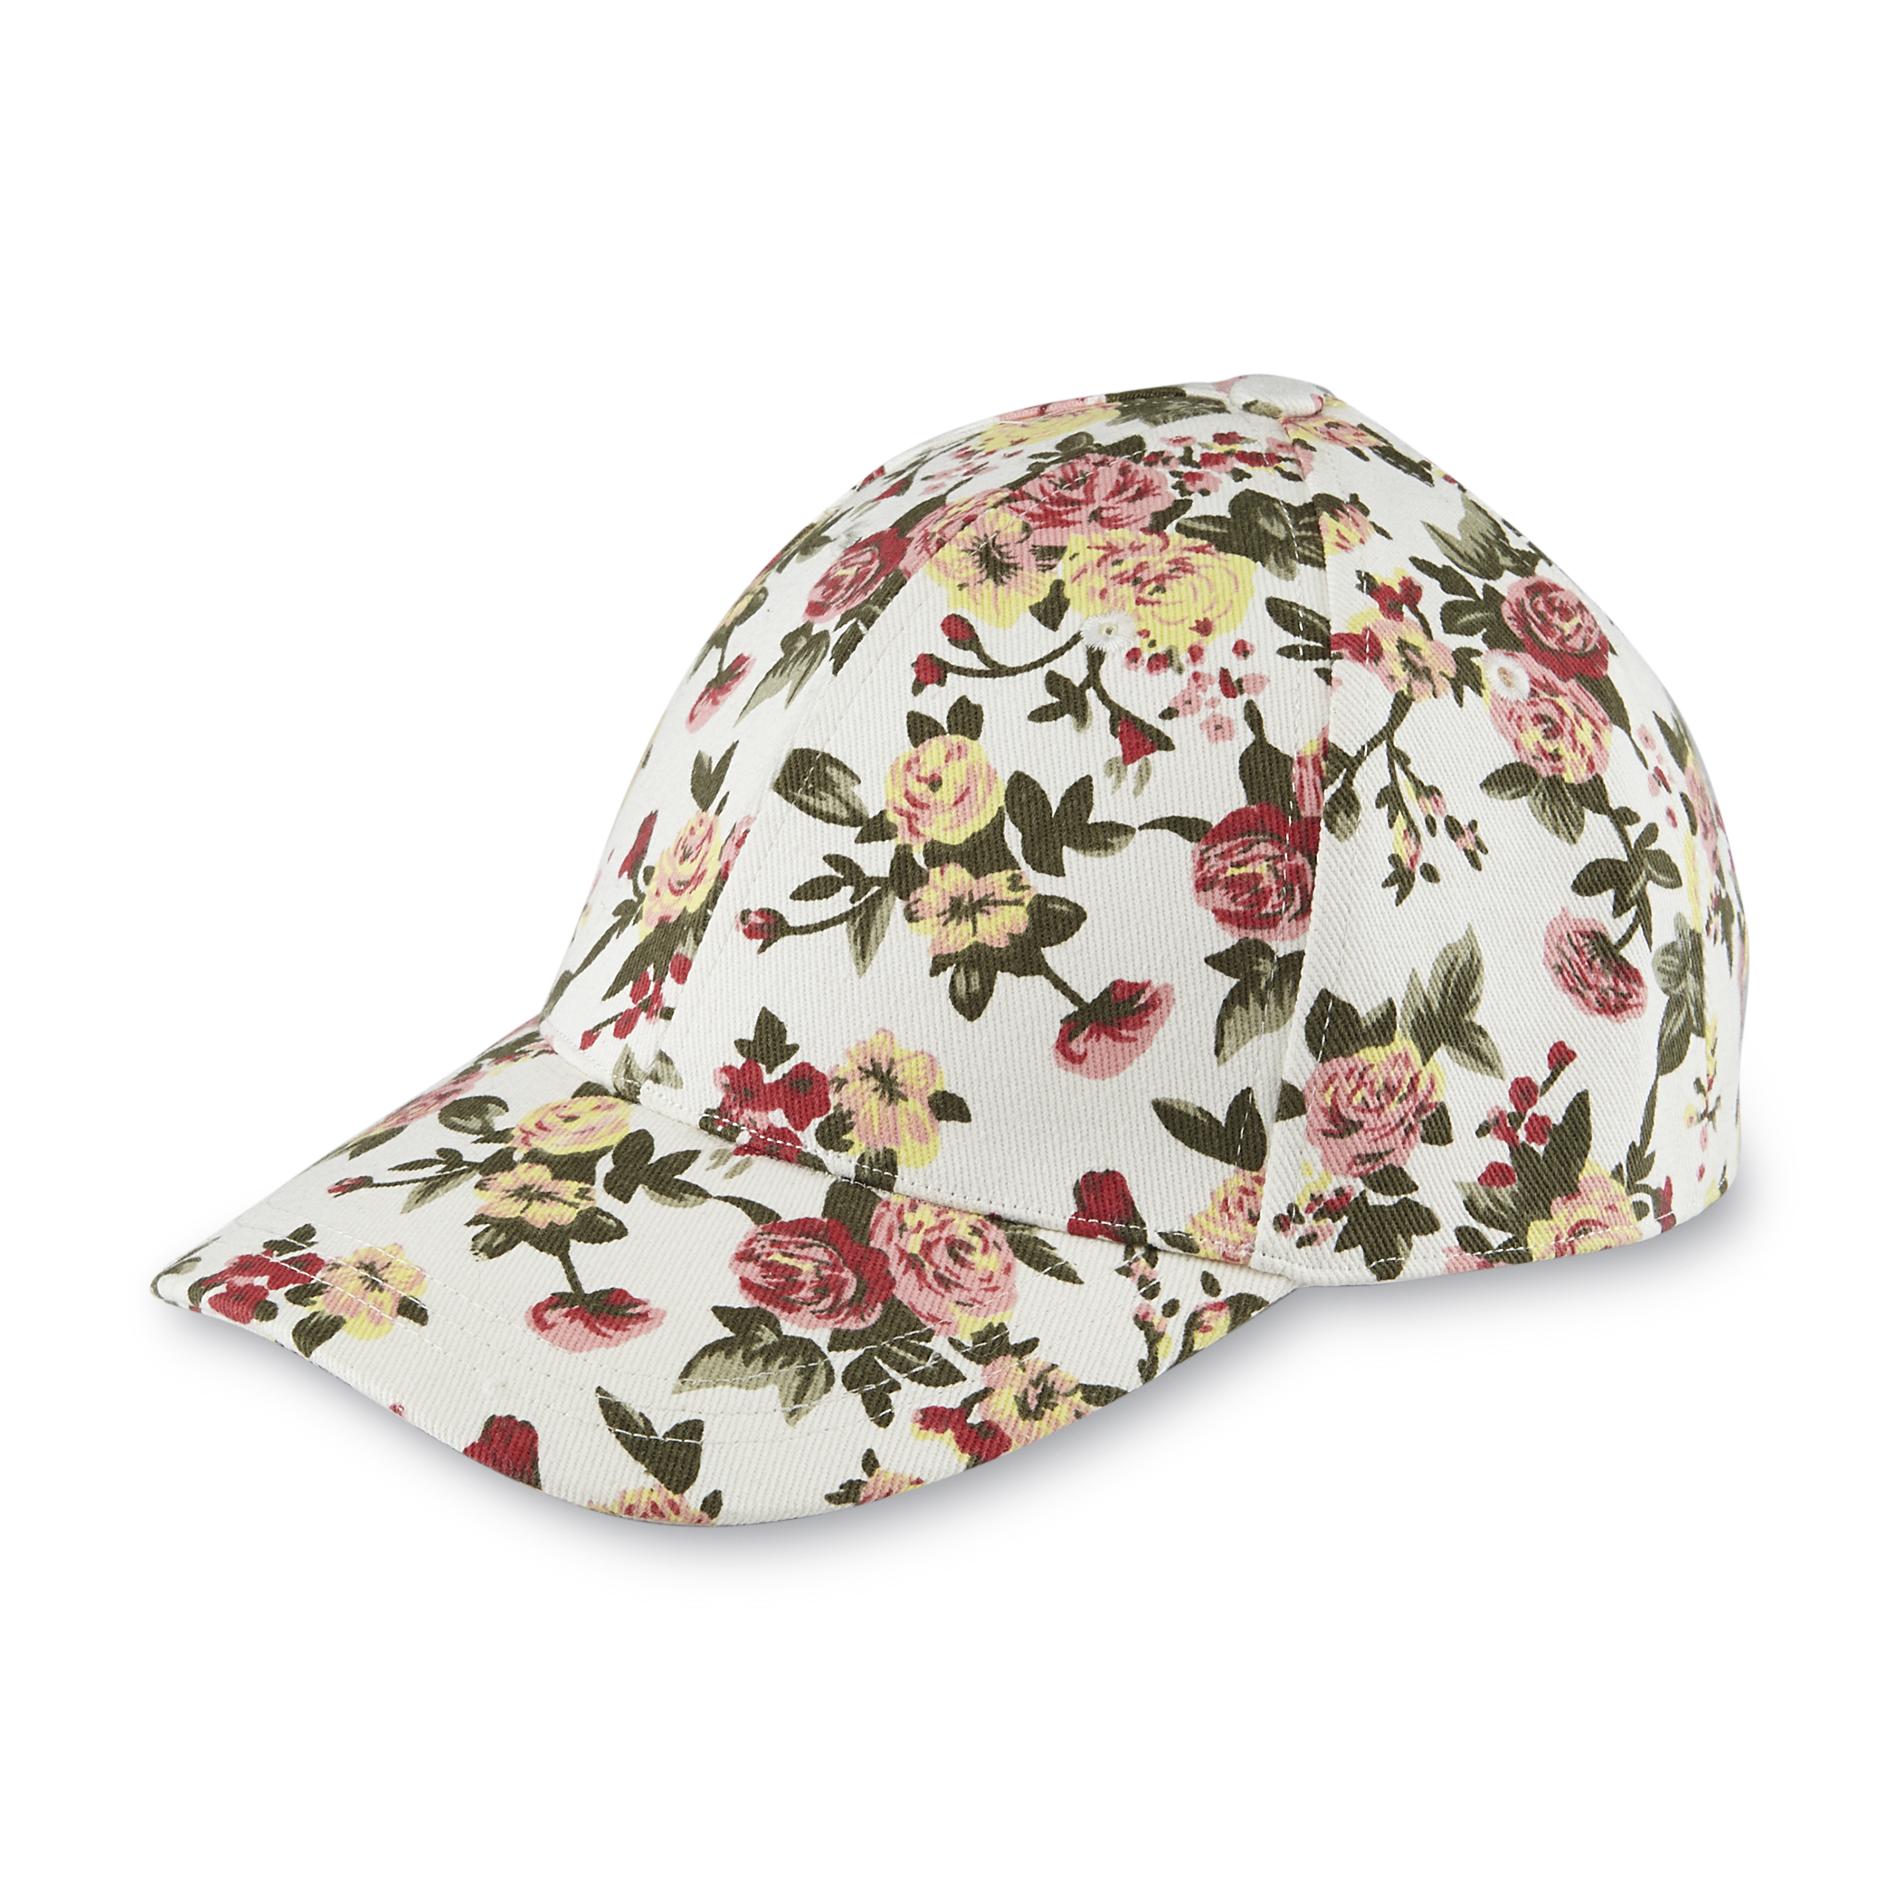 Joe Boxer Women's Colored Denim Baseball Hat - Floral